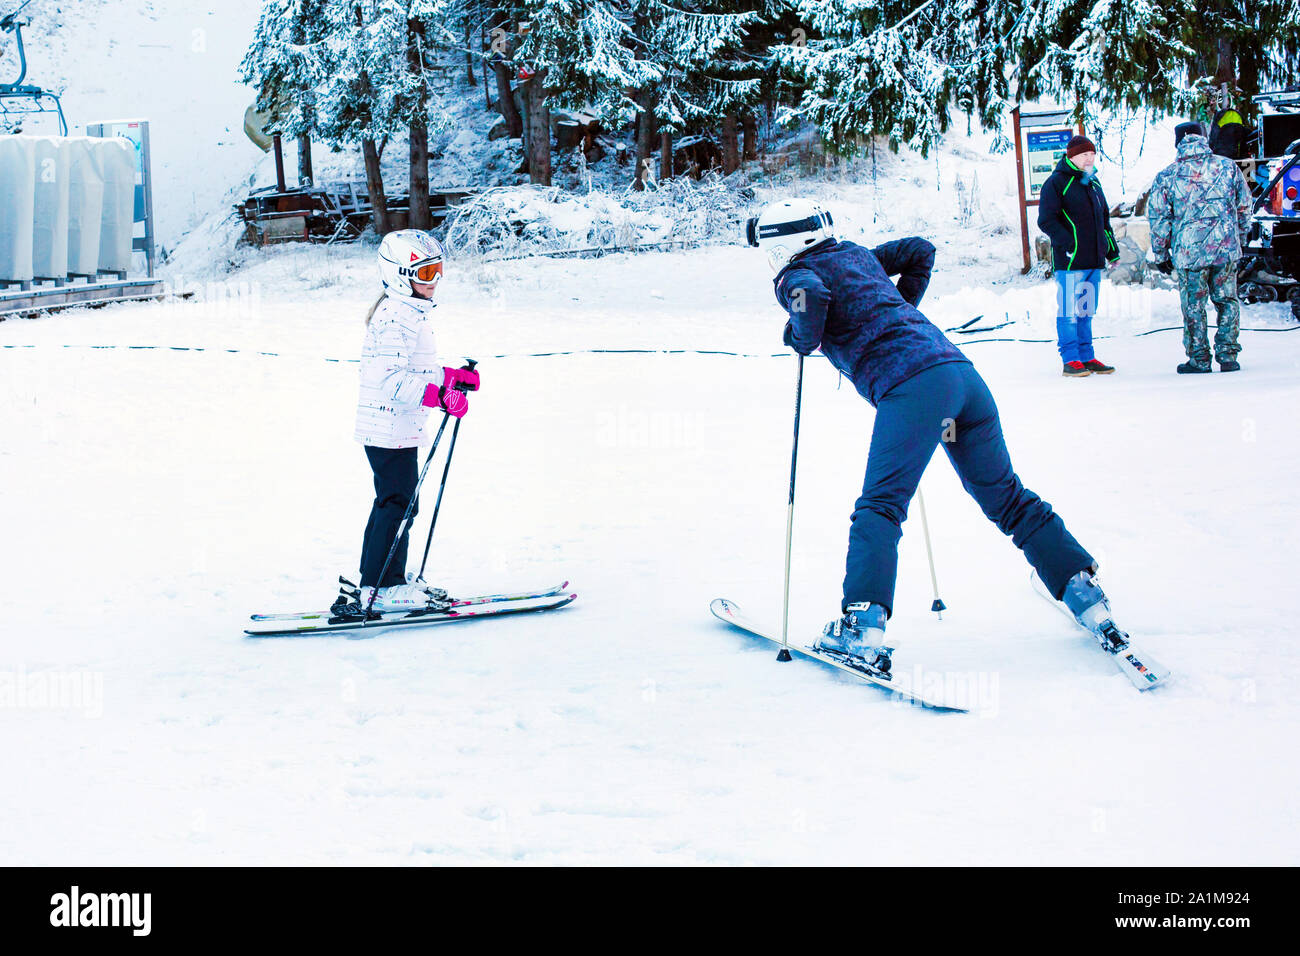 Bansko, Bulgaria - December 12, 2015: The girl learning to ski with instructor on the slope in Bansko, Bulgaria Stock Photo